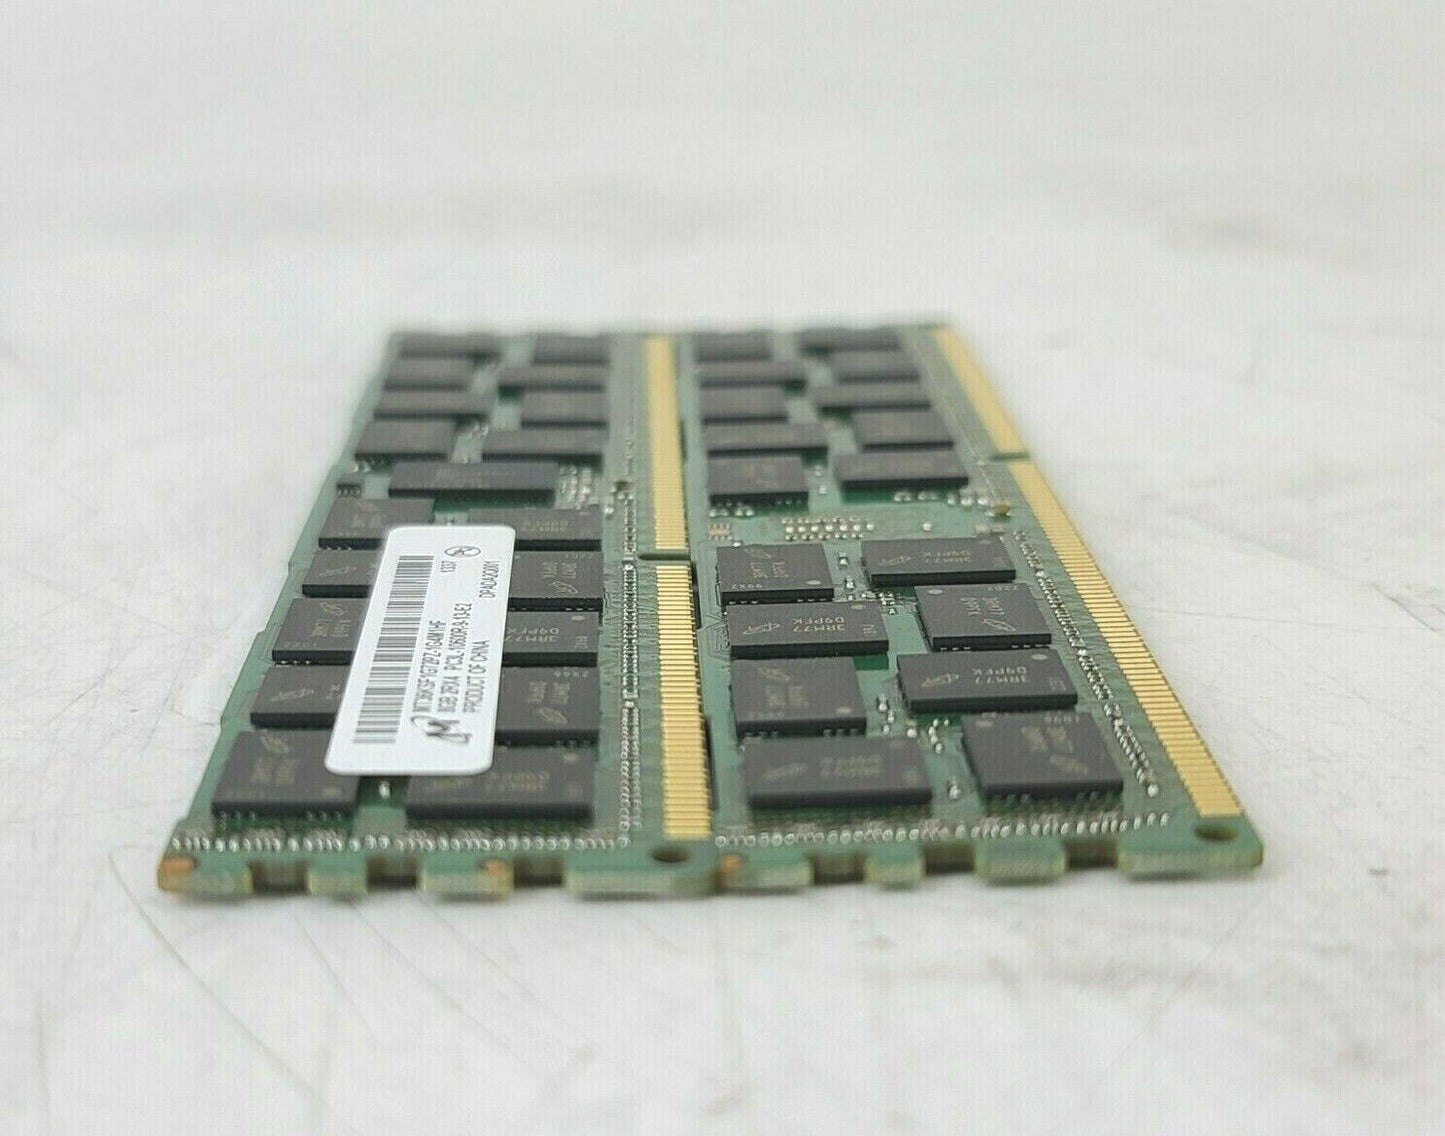 Lot of 2 Micron 8GB 2Rx4 PC3L-10600R Server RAM MT36KSF1G72PZ-1G4M1HF (AMX)